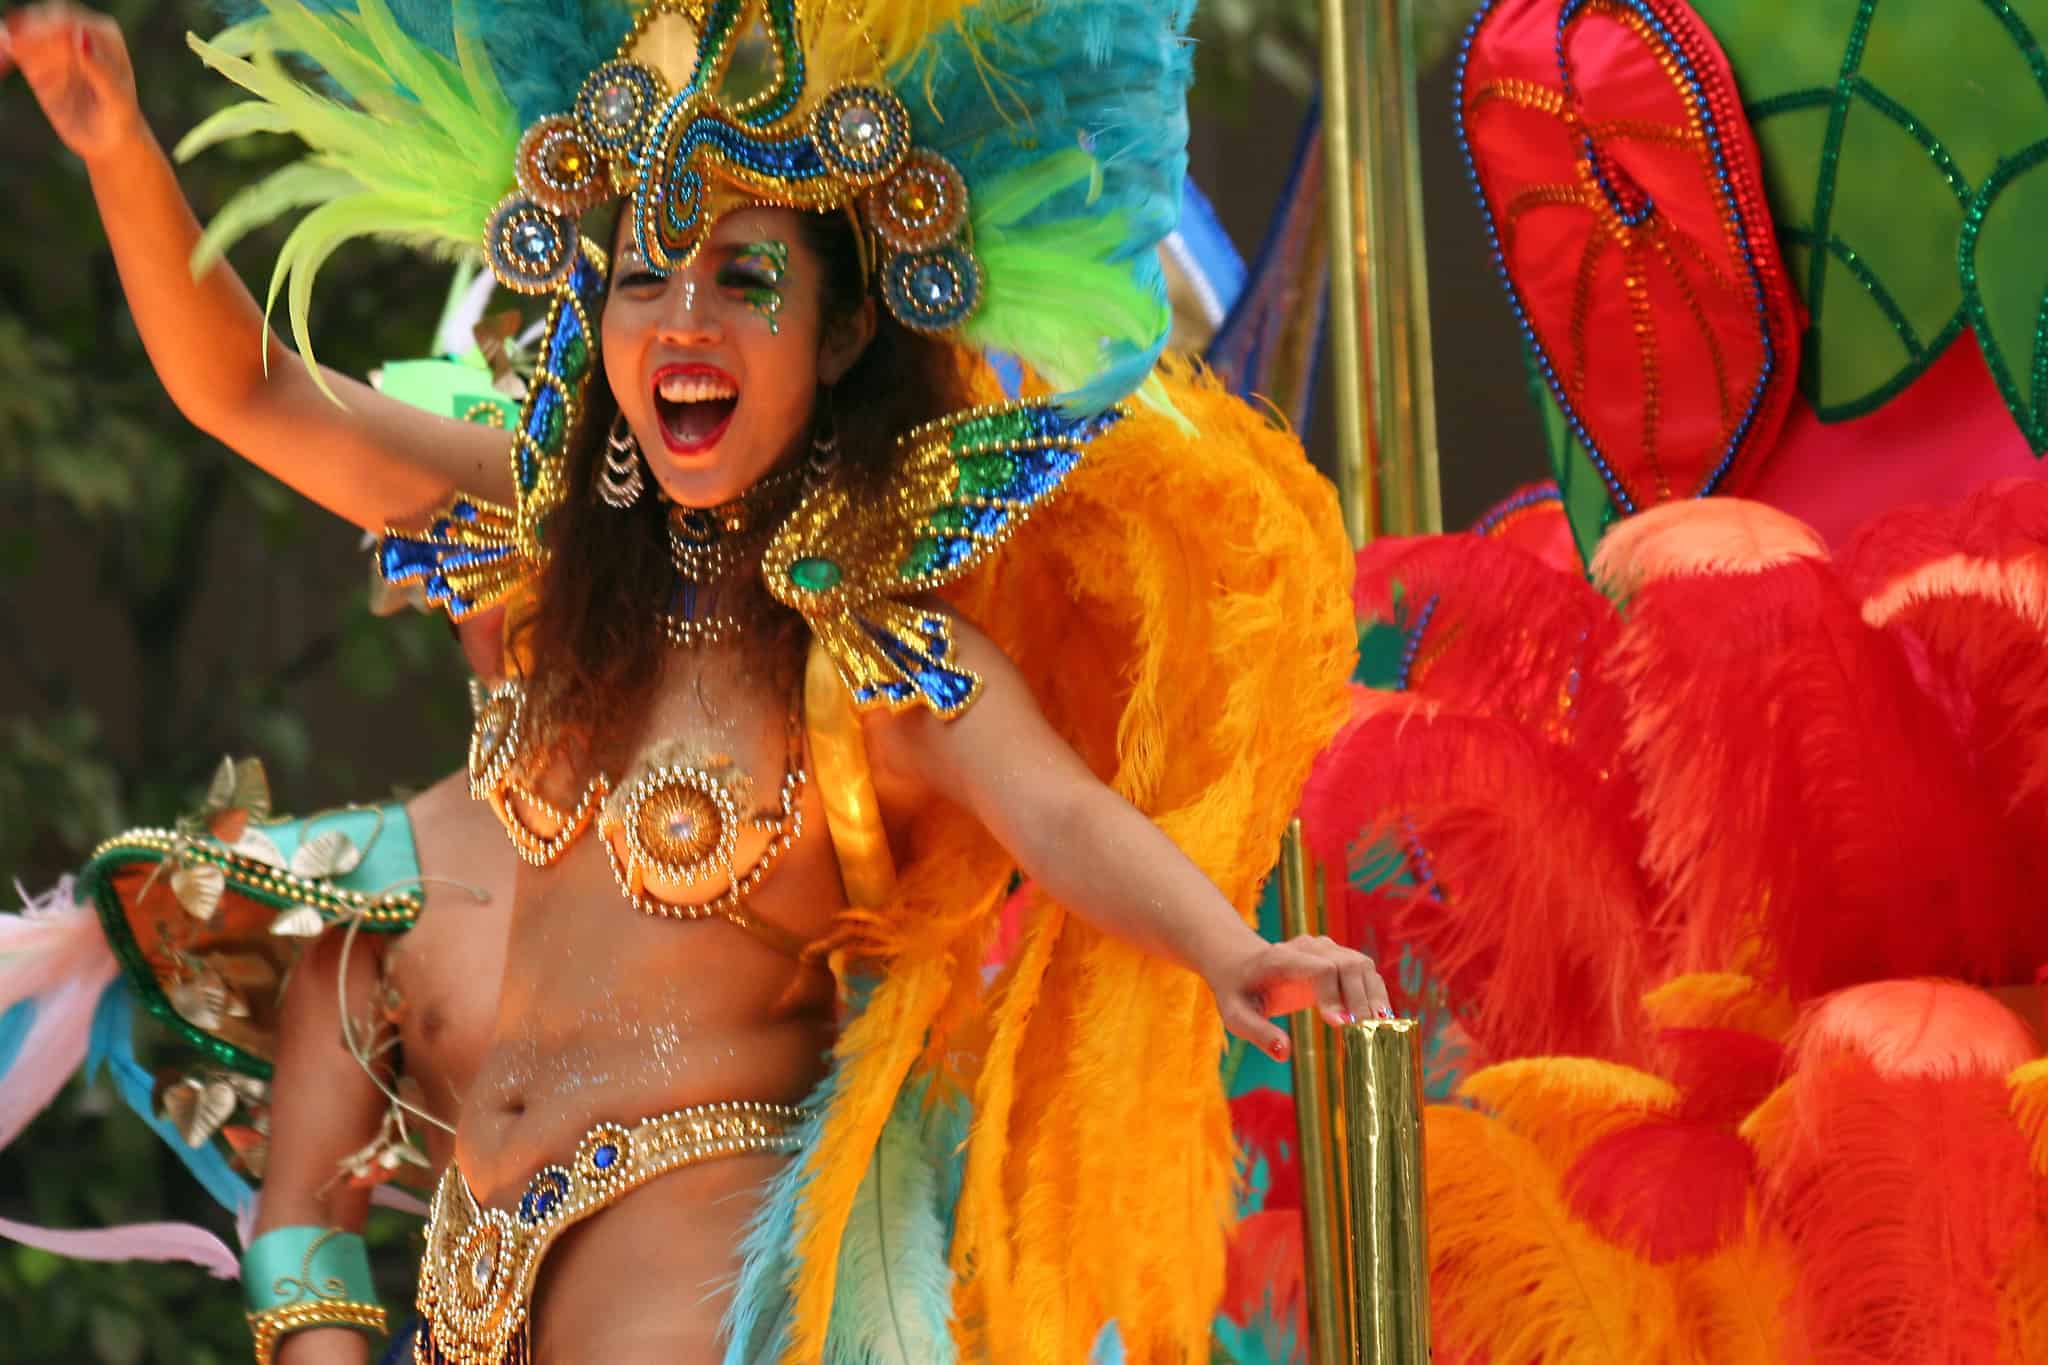 https://stingrayvilla.com/wp-content/uploads/2020/09/The-Colourful-Carnival-on-Cozumel-stingray-villa-2256.jpg